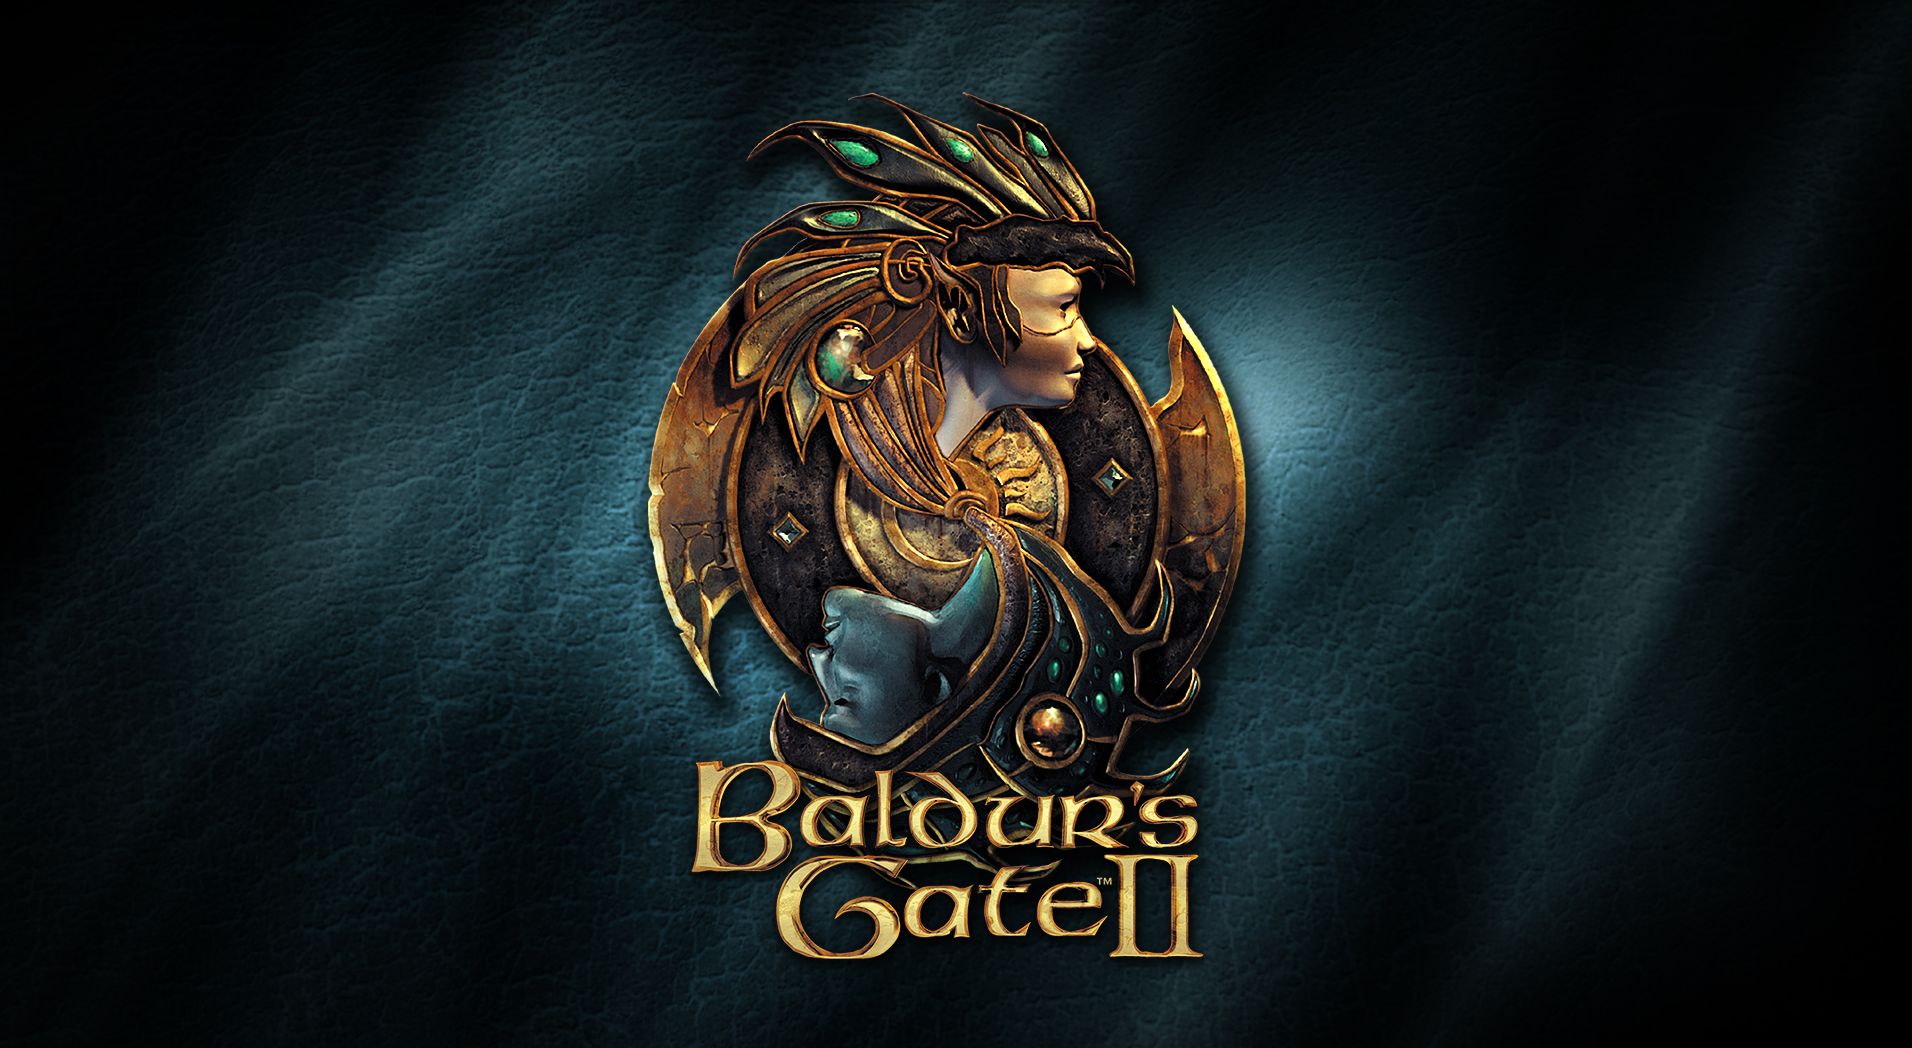 Baldur's Gate Enhanced Editions Pack